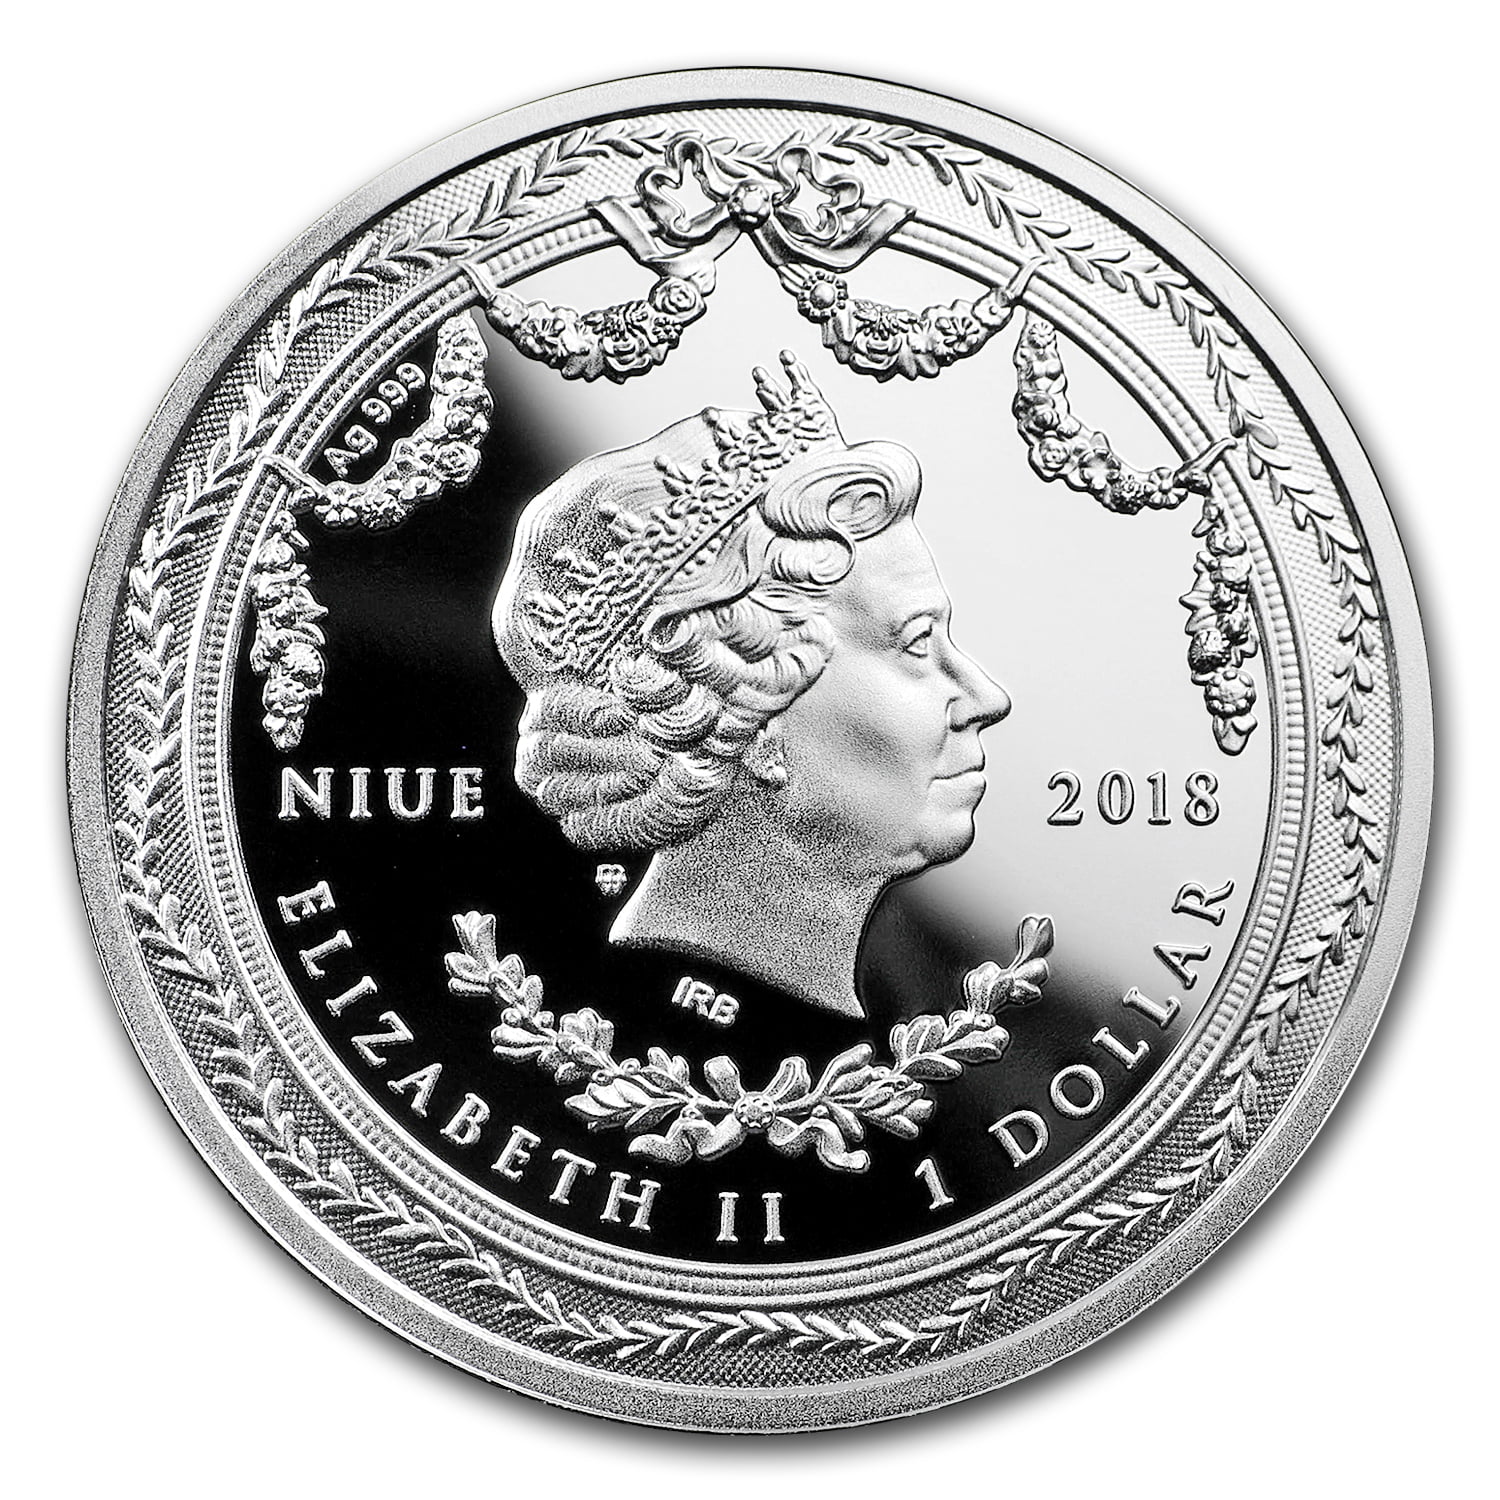 2018 Niue $1 Imperial Desk Clock Fabergé Art 1oz Silver Proof Coin